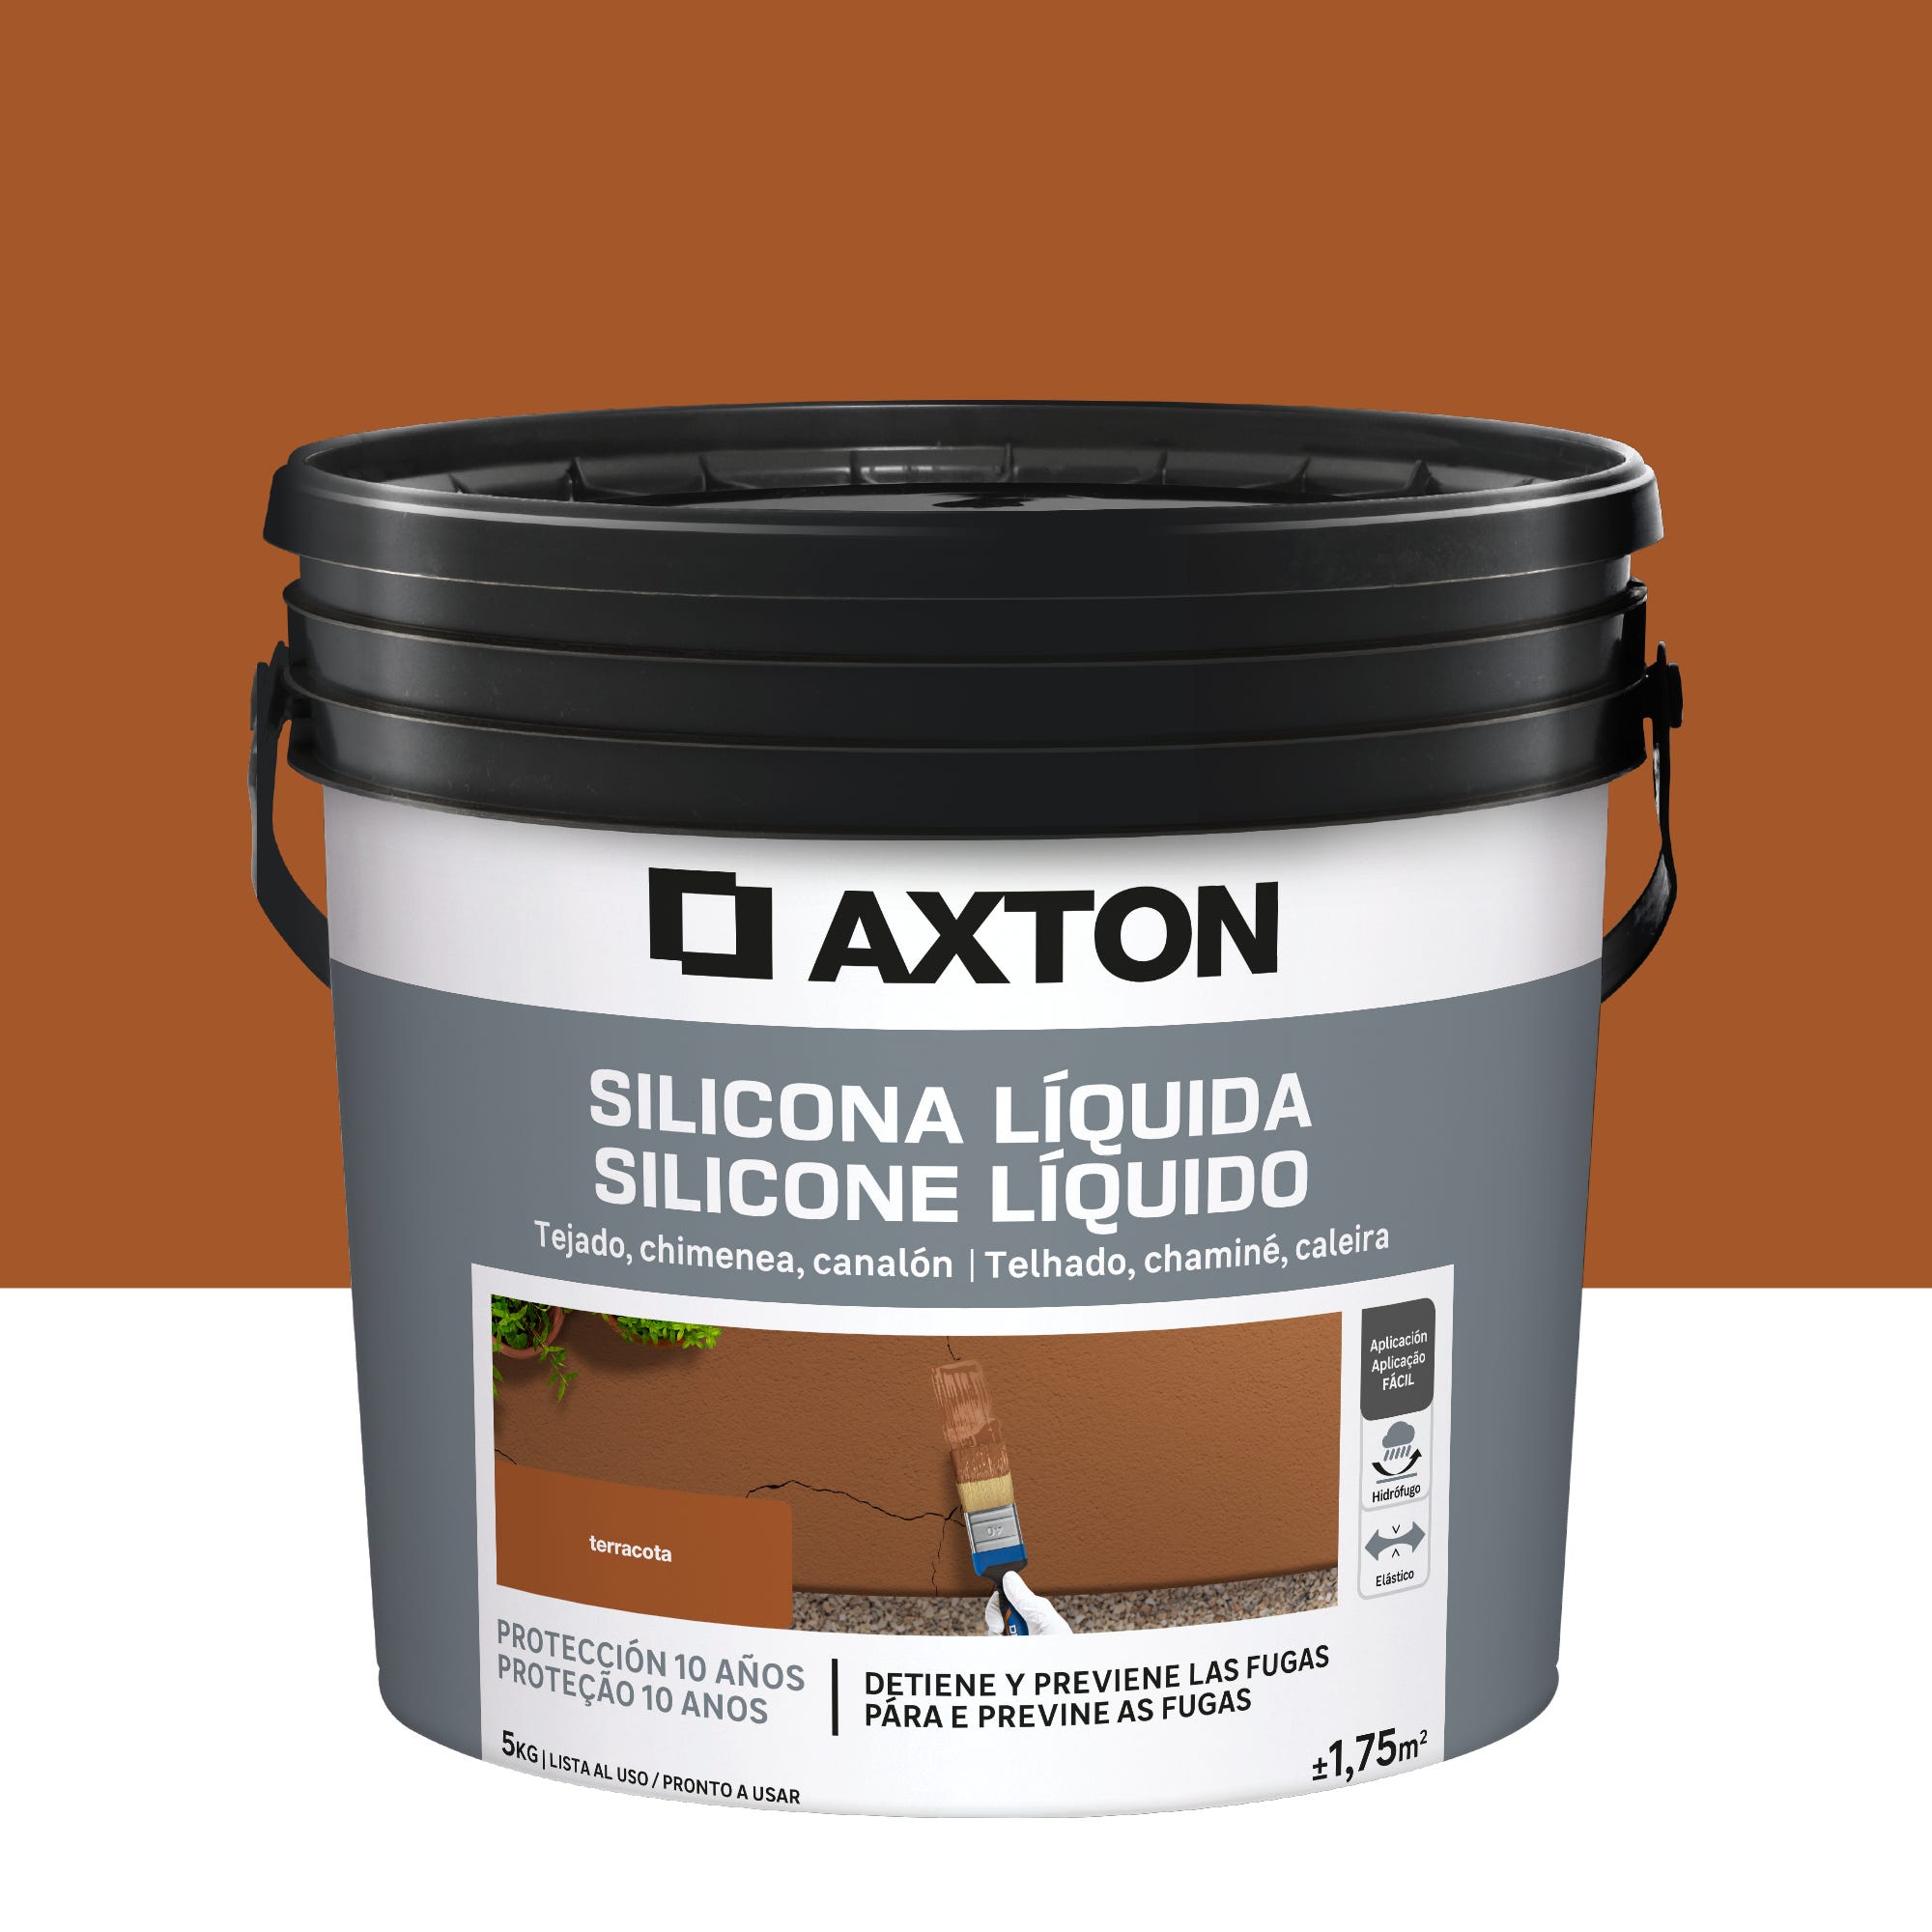 Silicona liquida AXTON 5Kg terracota